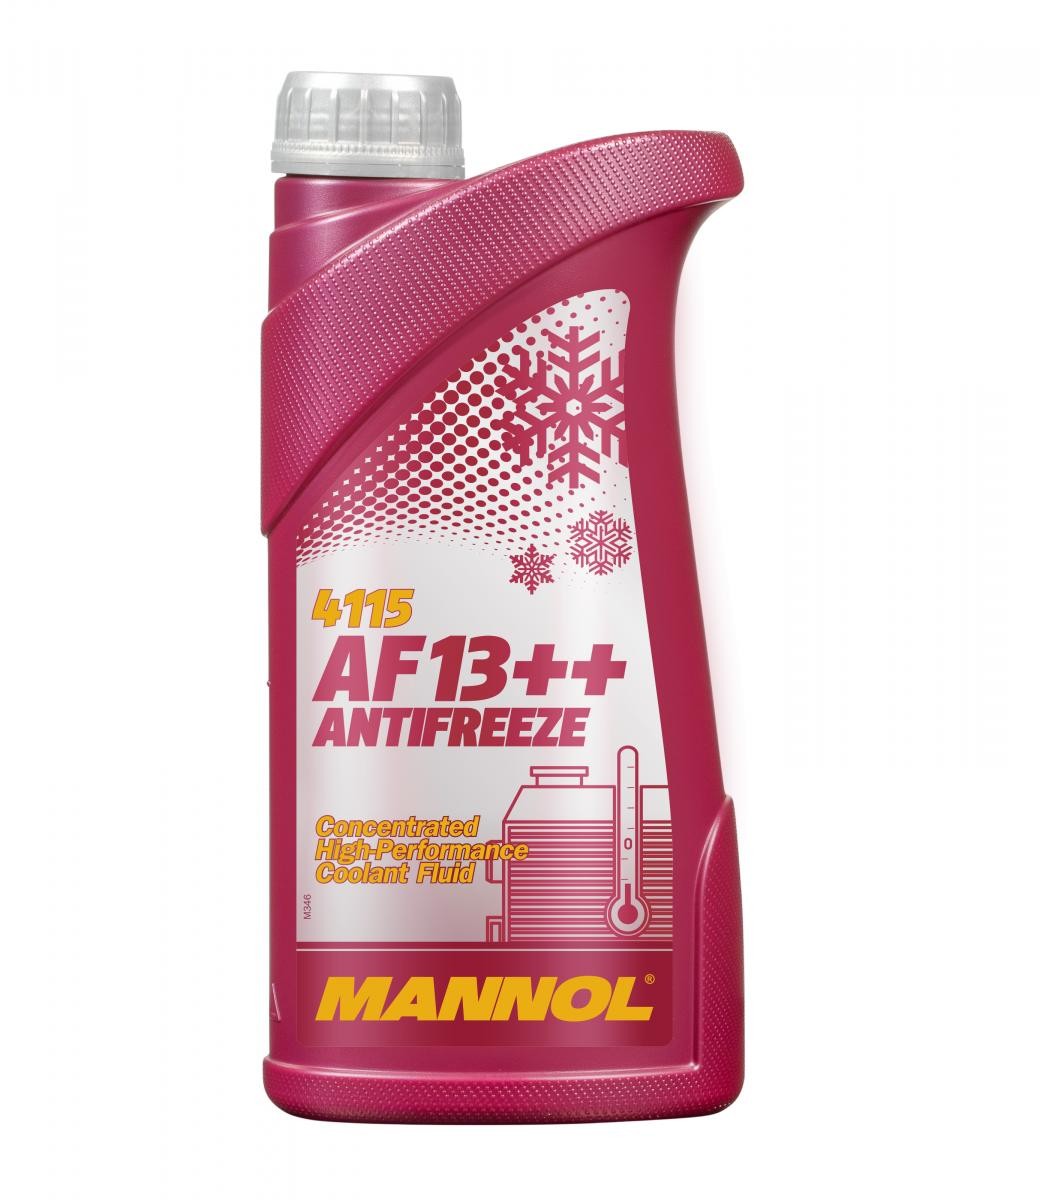 Coolant MANNOL AF13++, High-performance MN4115-1